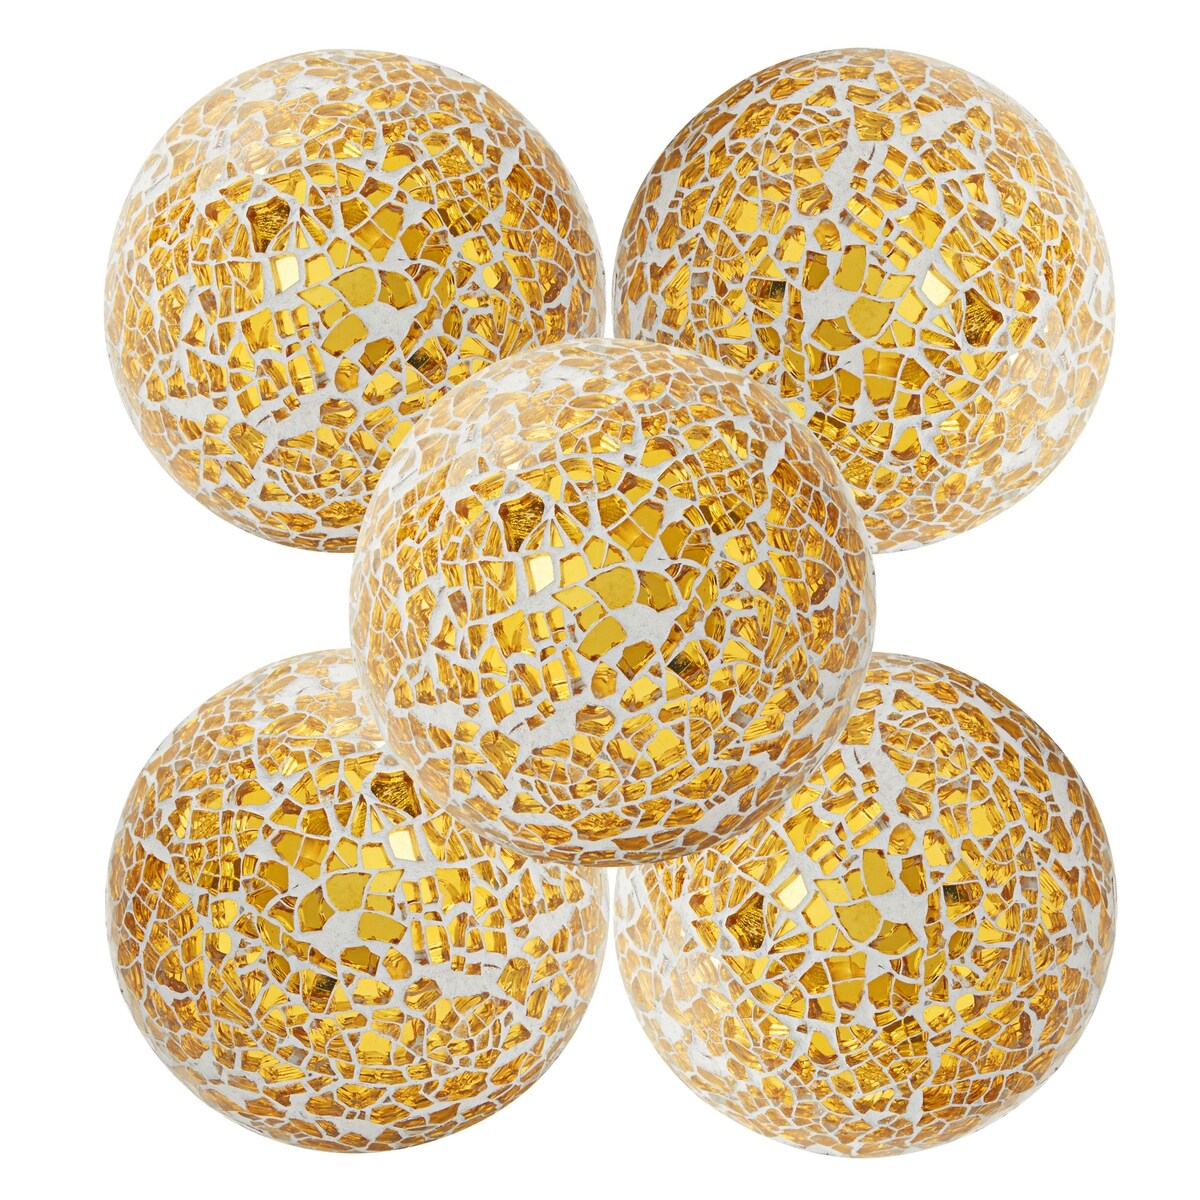 The Holiday Aisle® Decorative Glass Ball Ornament | Wayfair